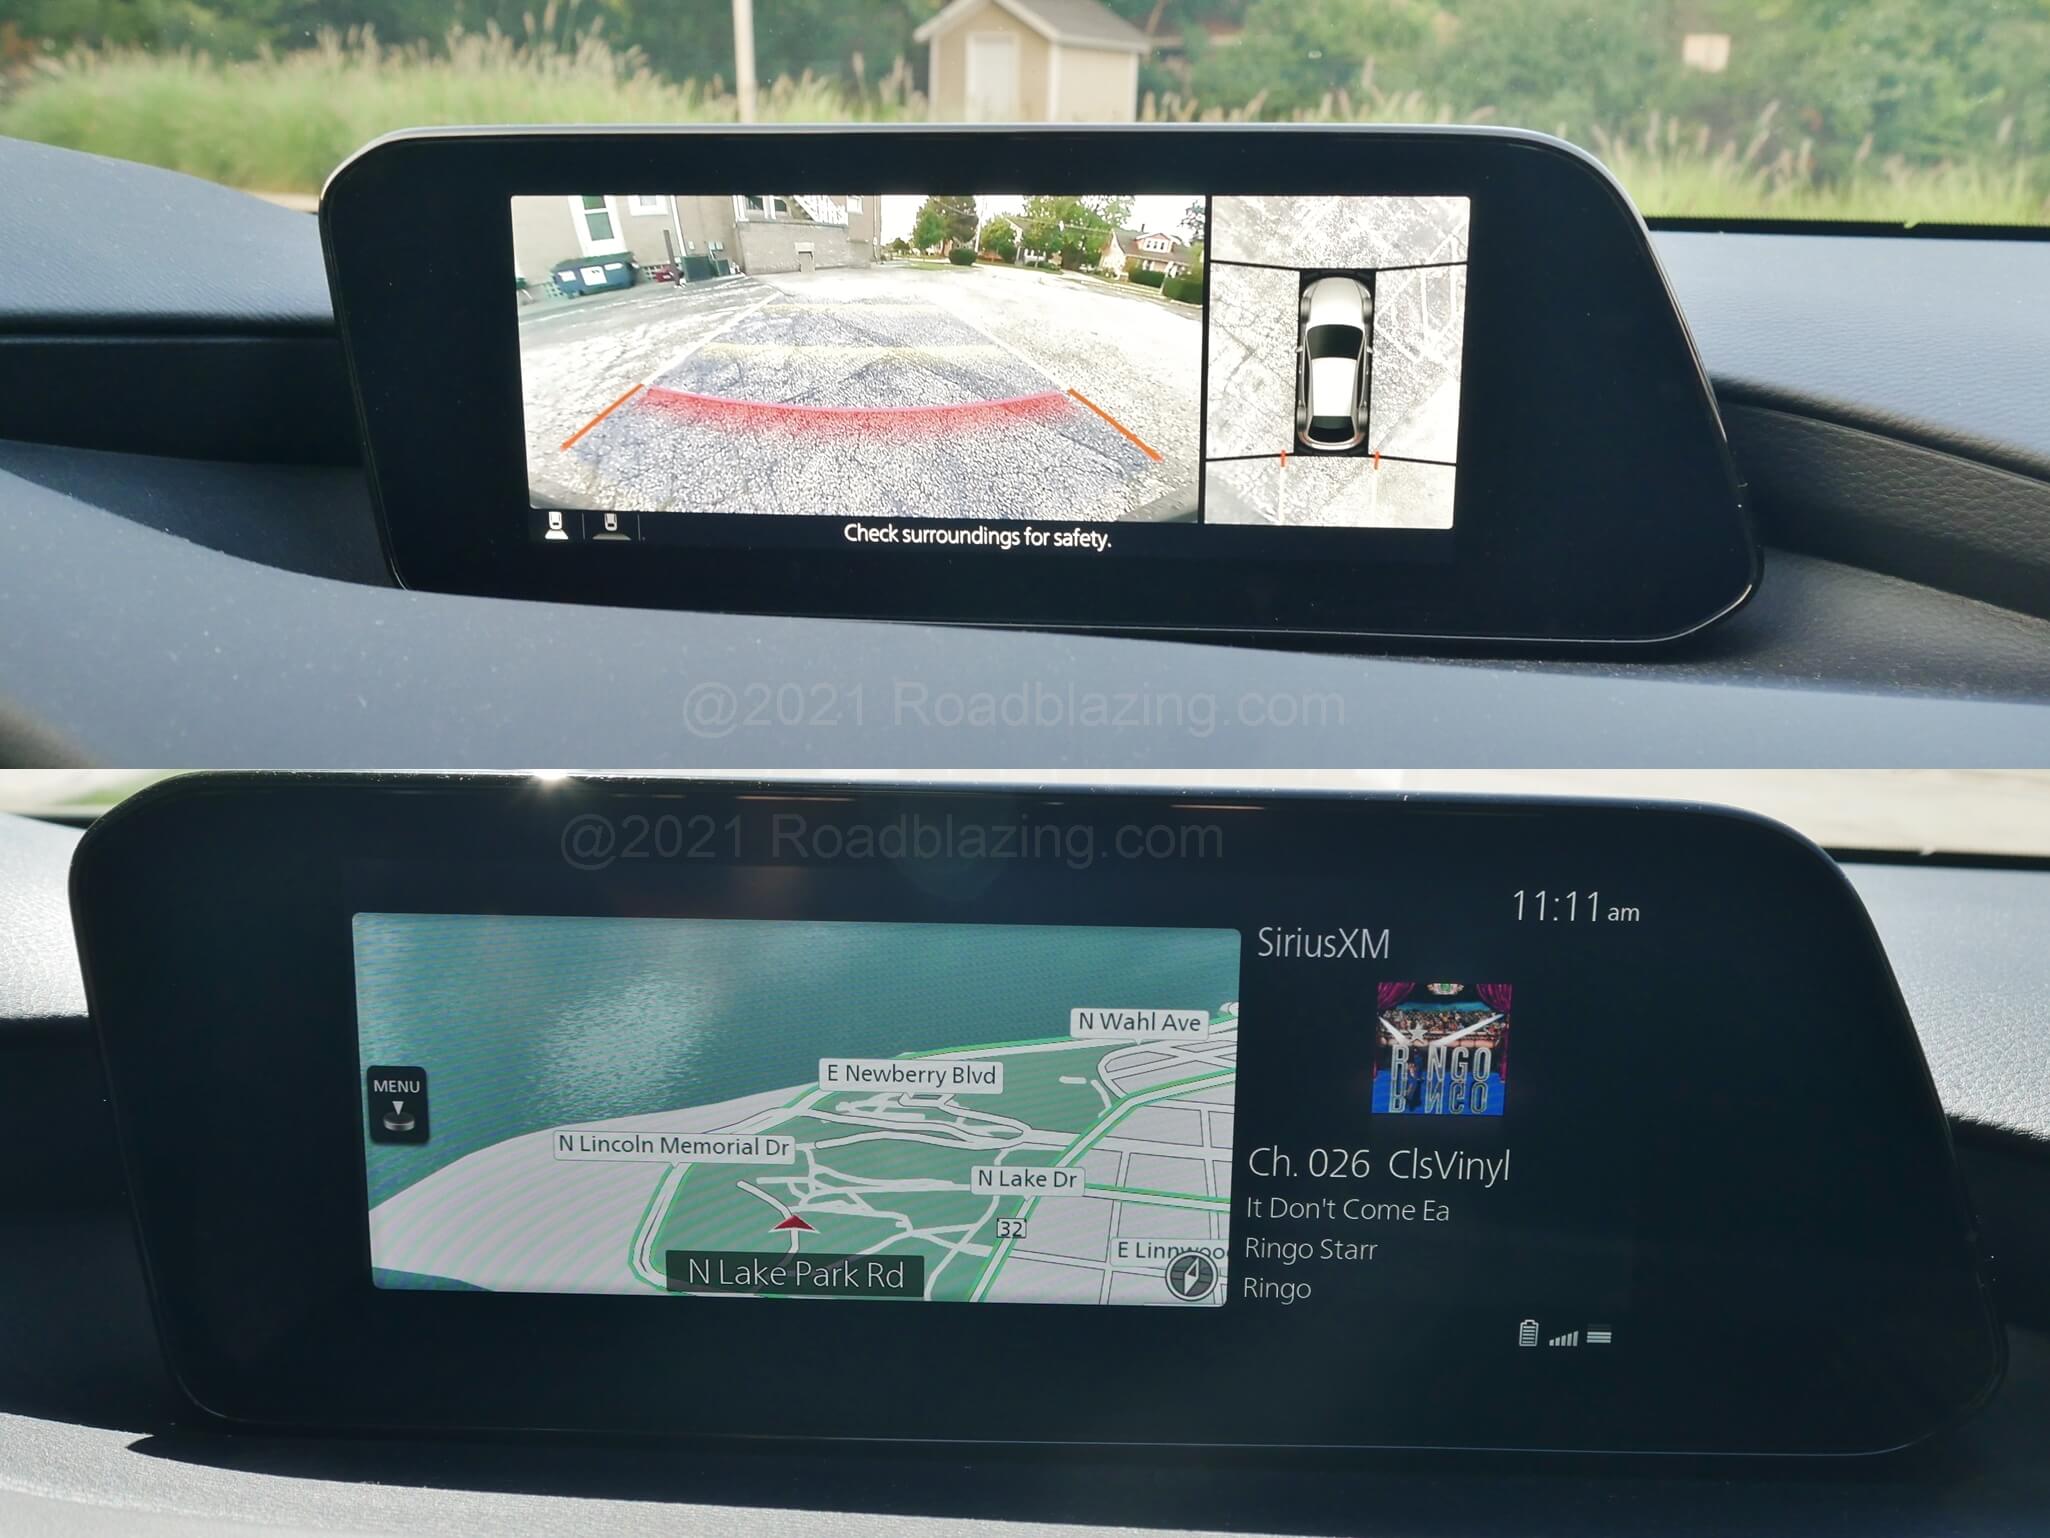 2021 Mazda 3 2.5 Turbo Hatchback: Premium Plus trims add surround cameras to the comprehensive ActiveSense i driver assist suite. Native navigation maps depict waves off Milwaukee's Lake Michigan shoreline.